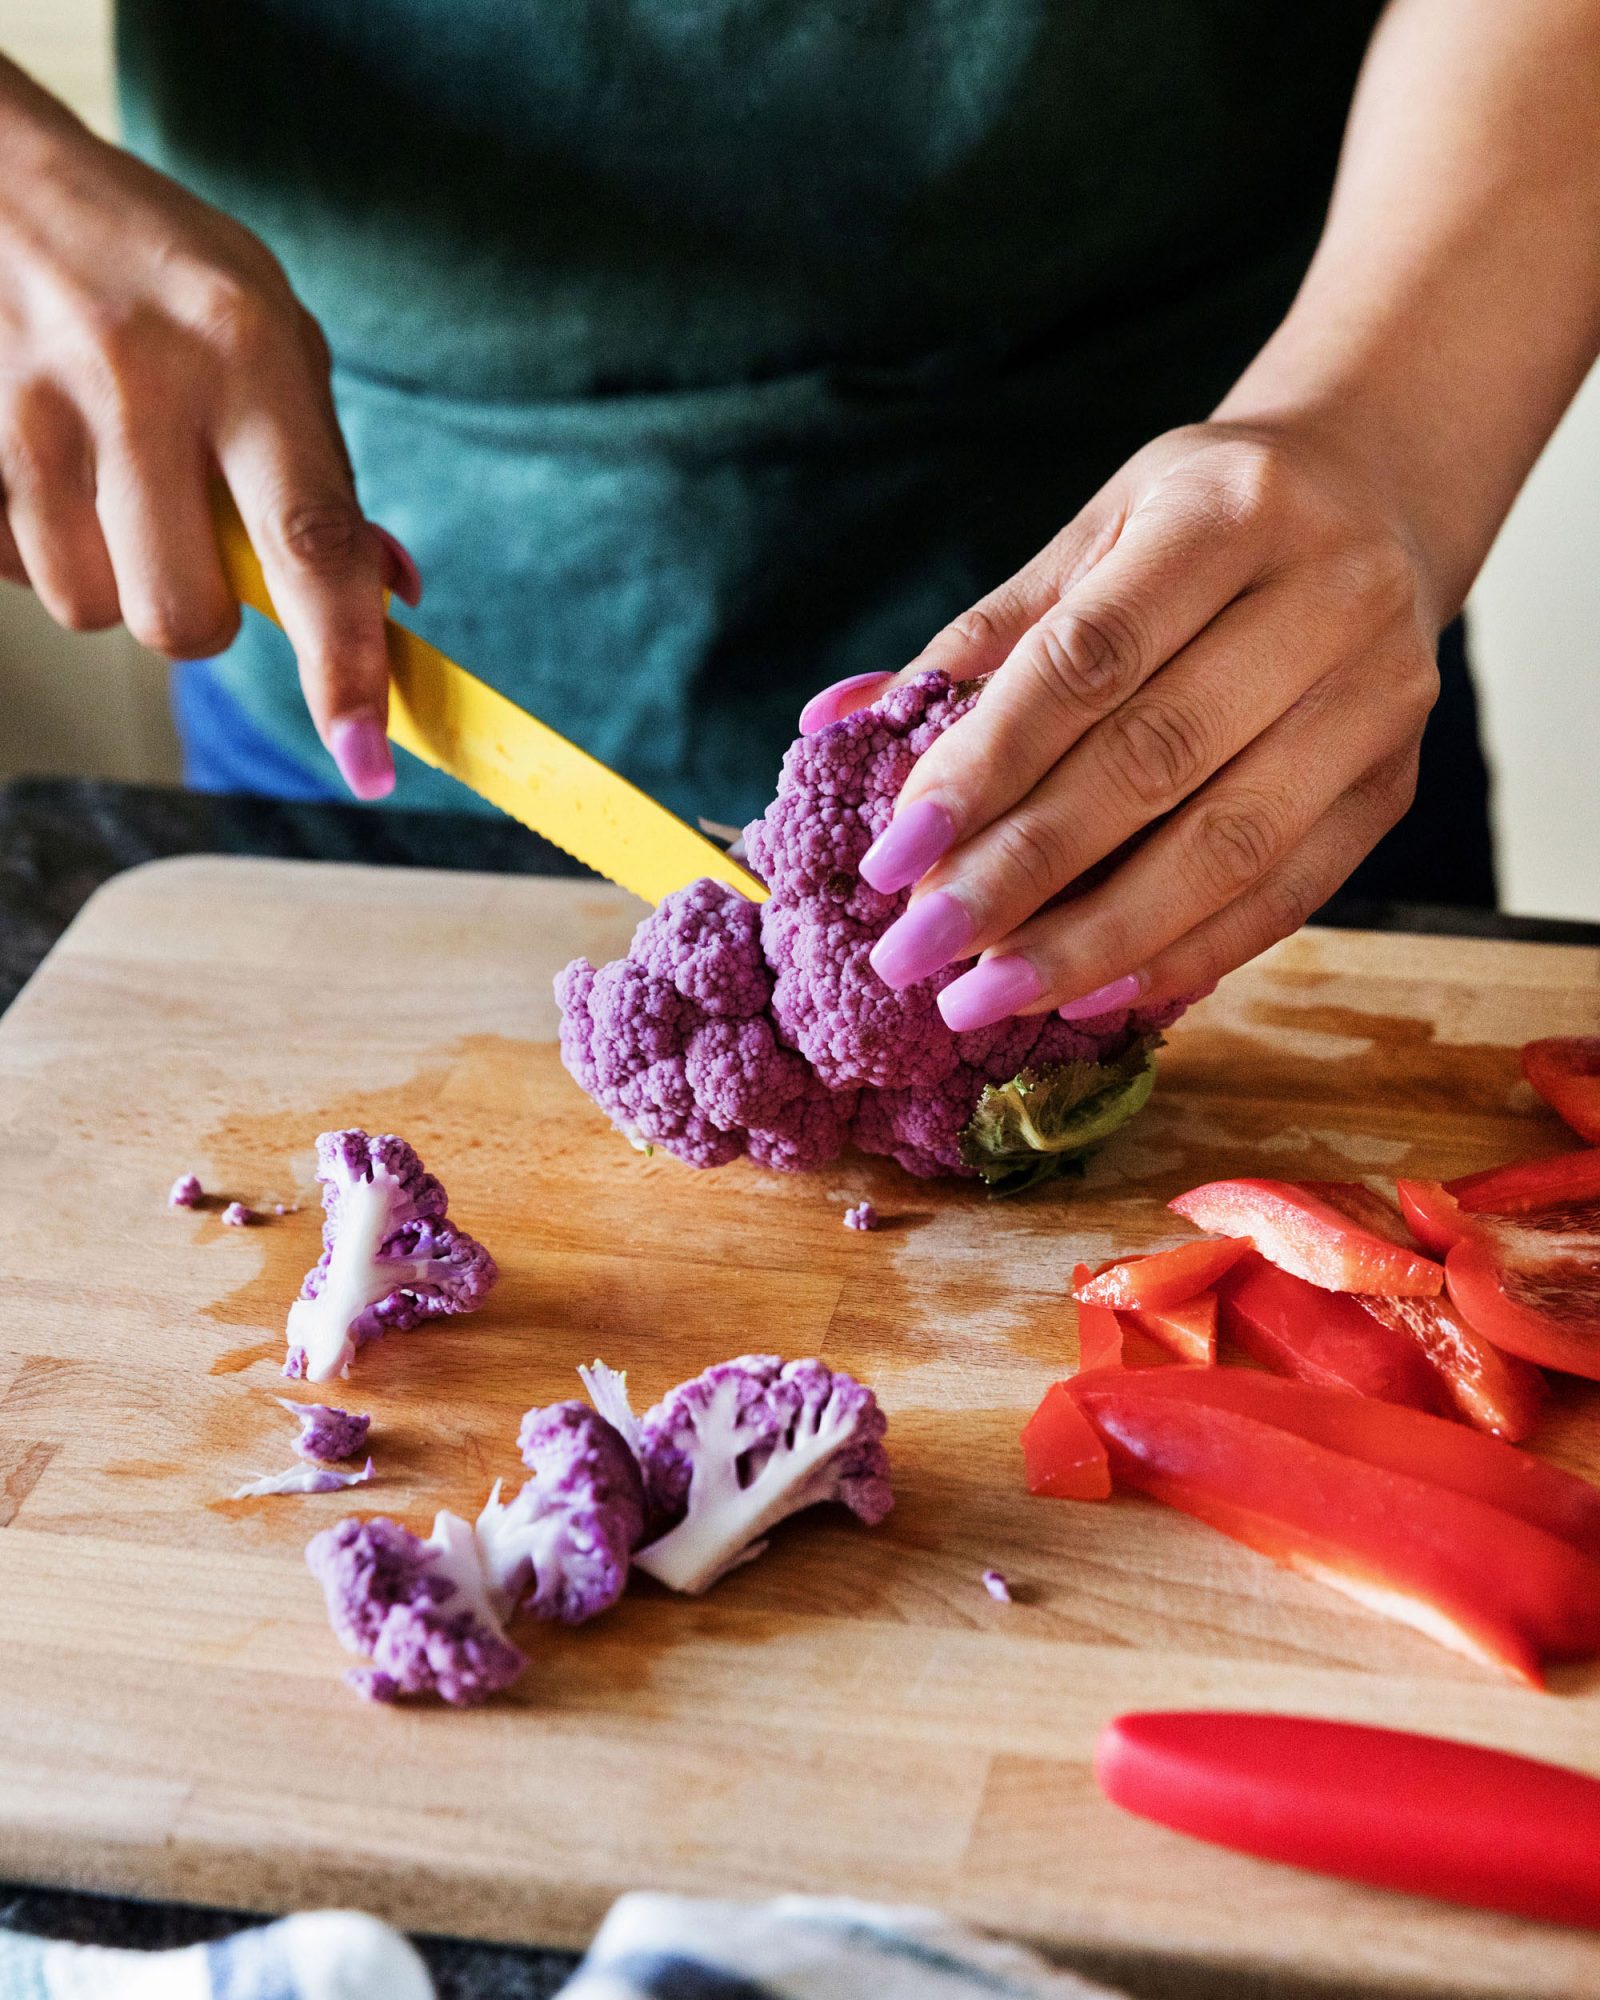 chopping purple cauliflower and red pepper